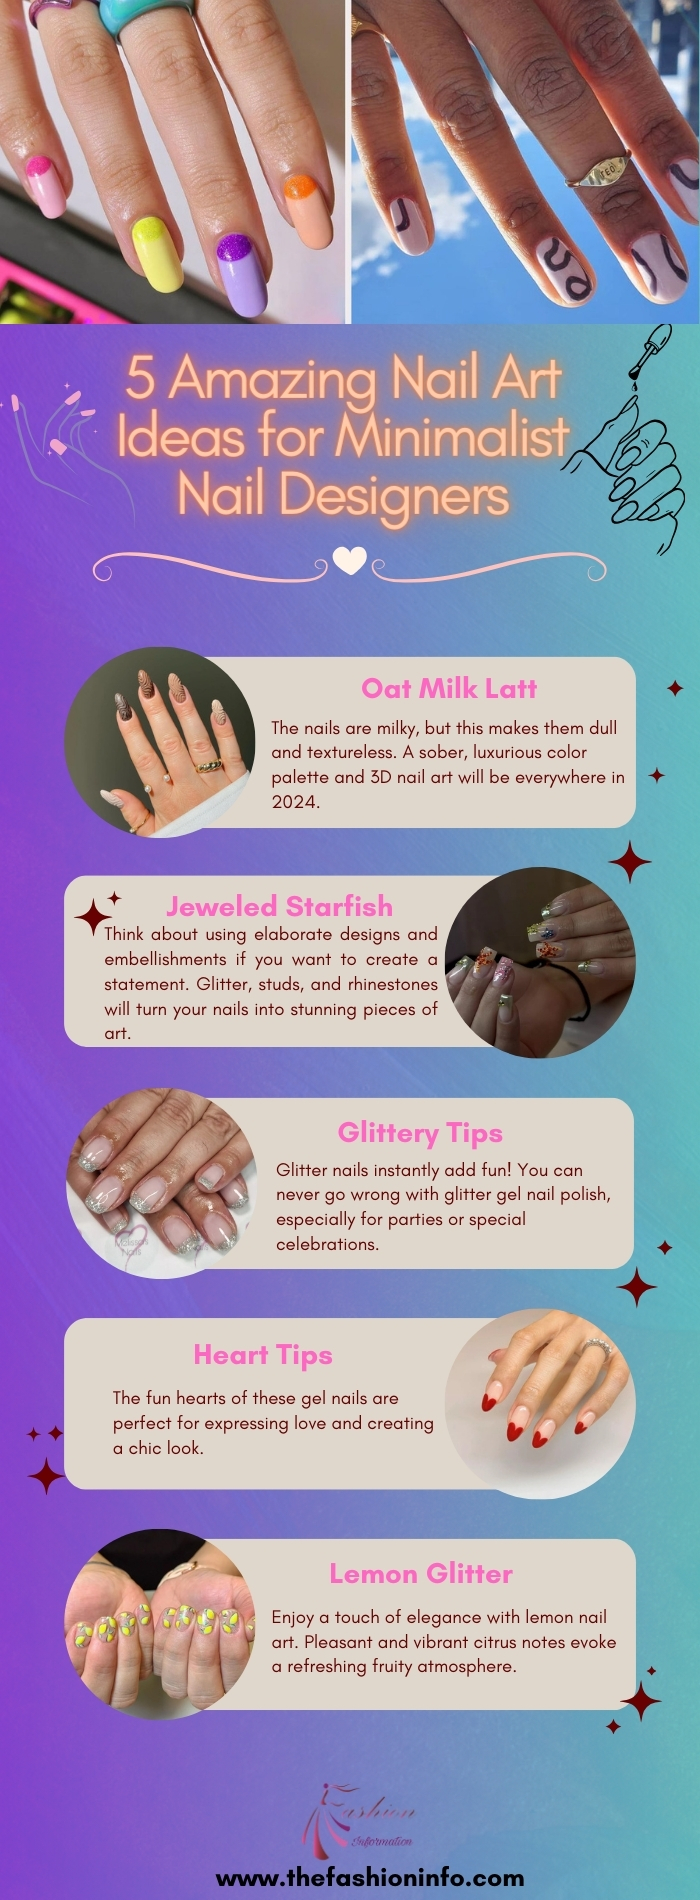 5 Amazing Nail Art Ideas for Minimalist Nail Designers